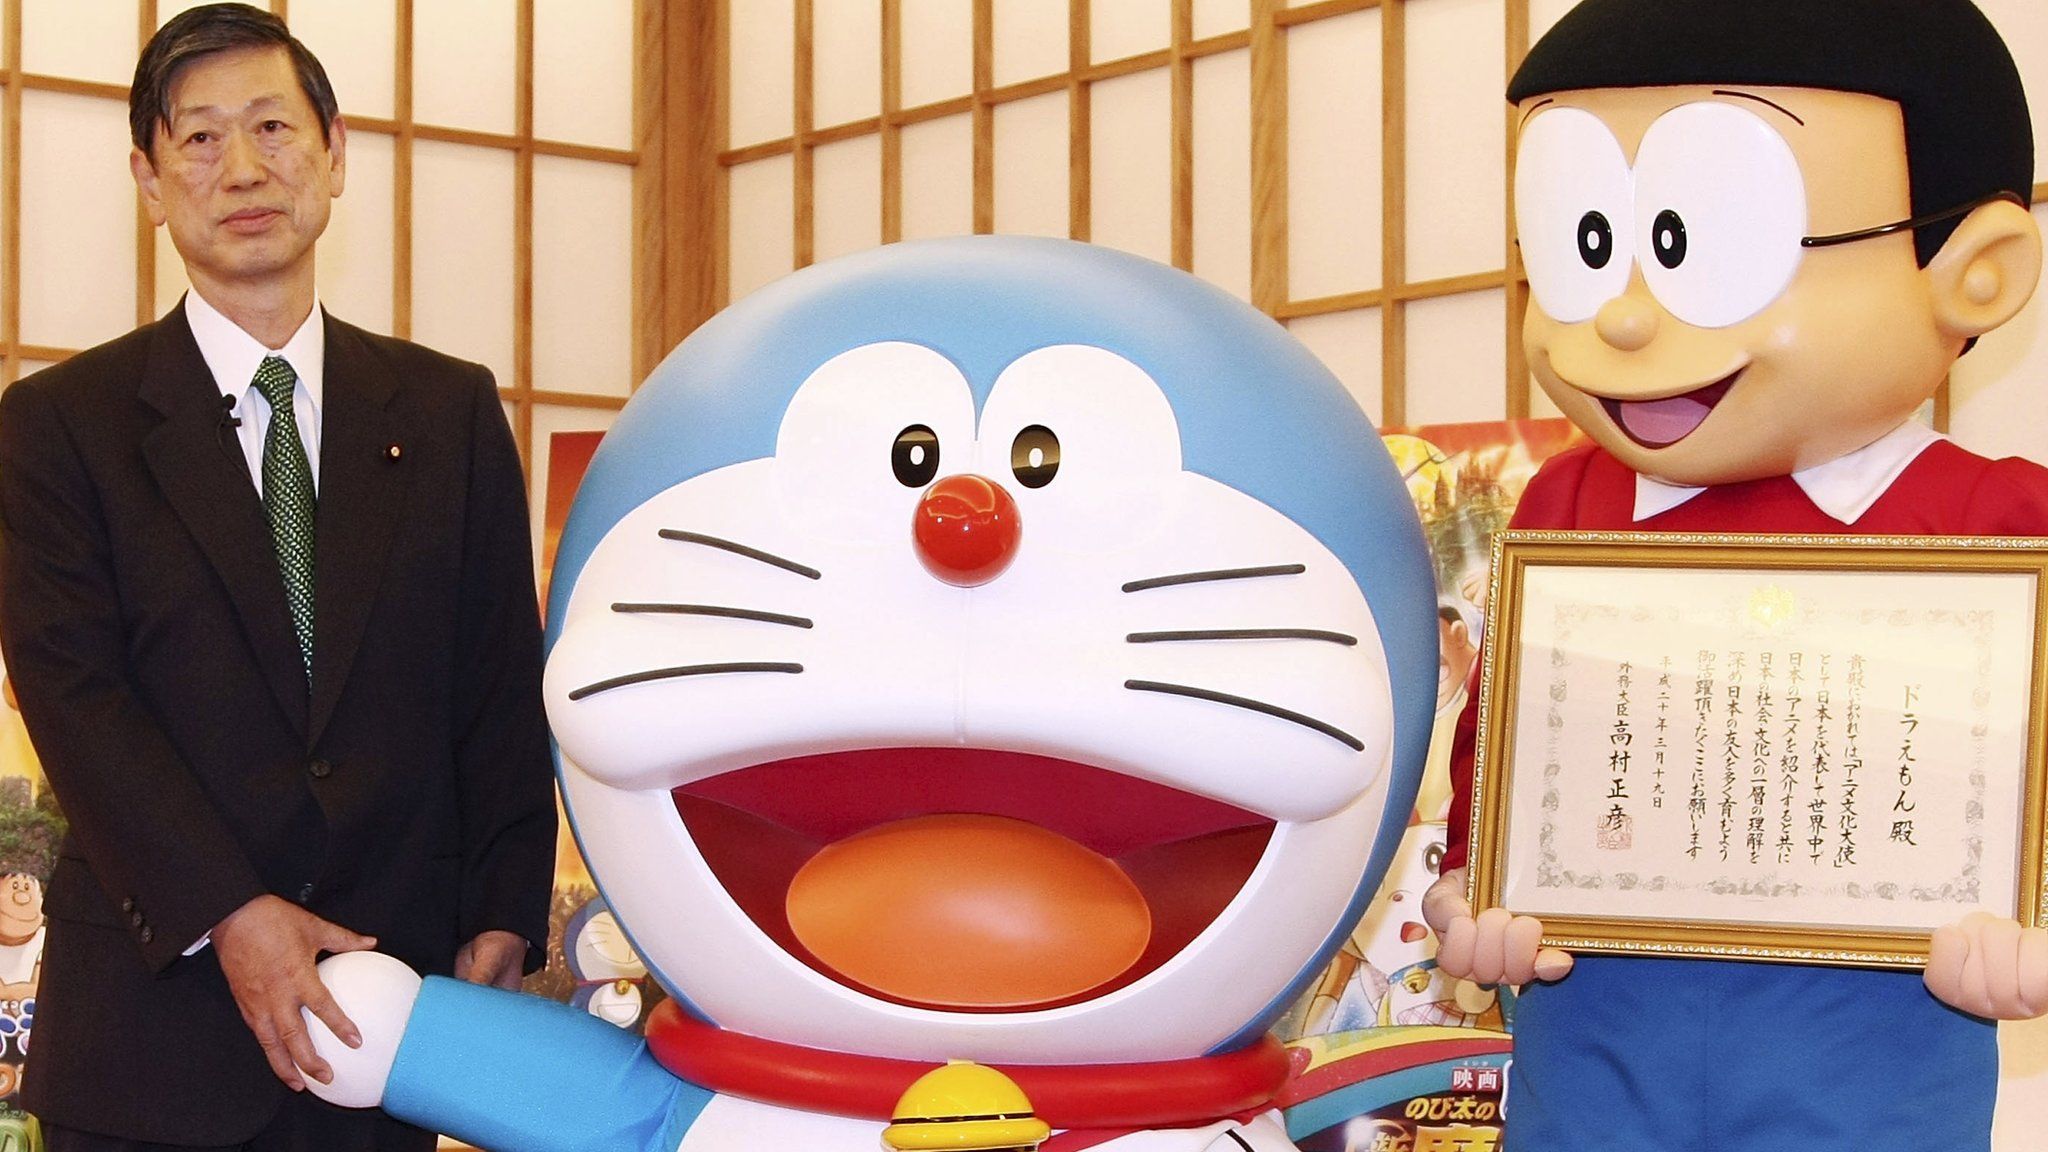 Doraemon cartoon character